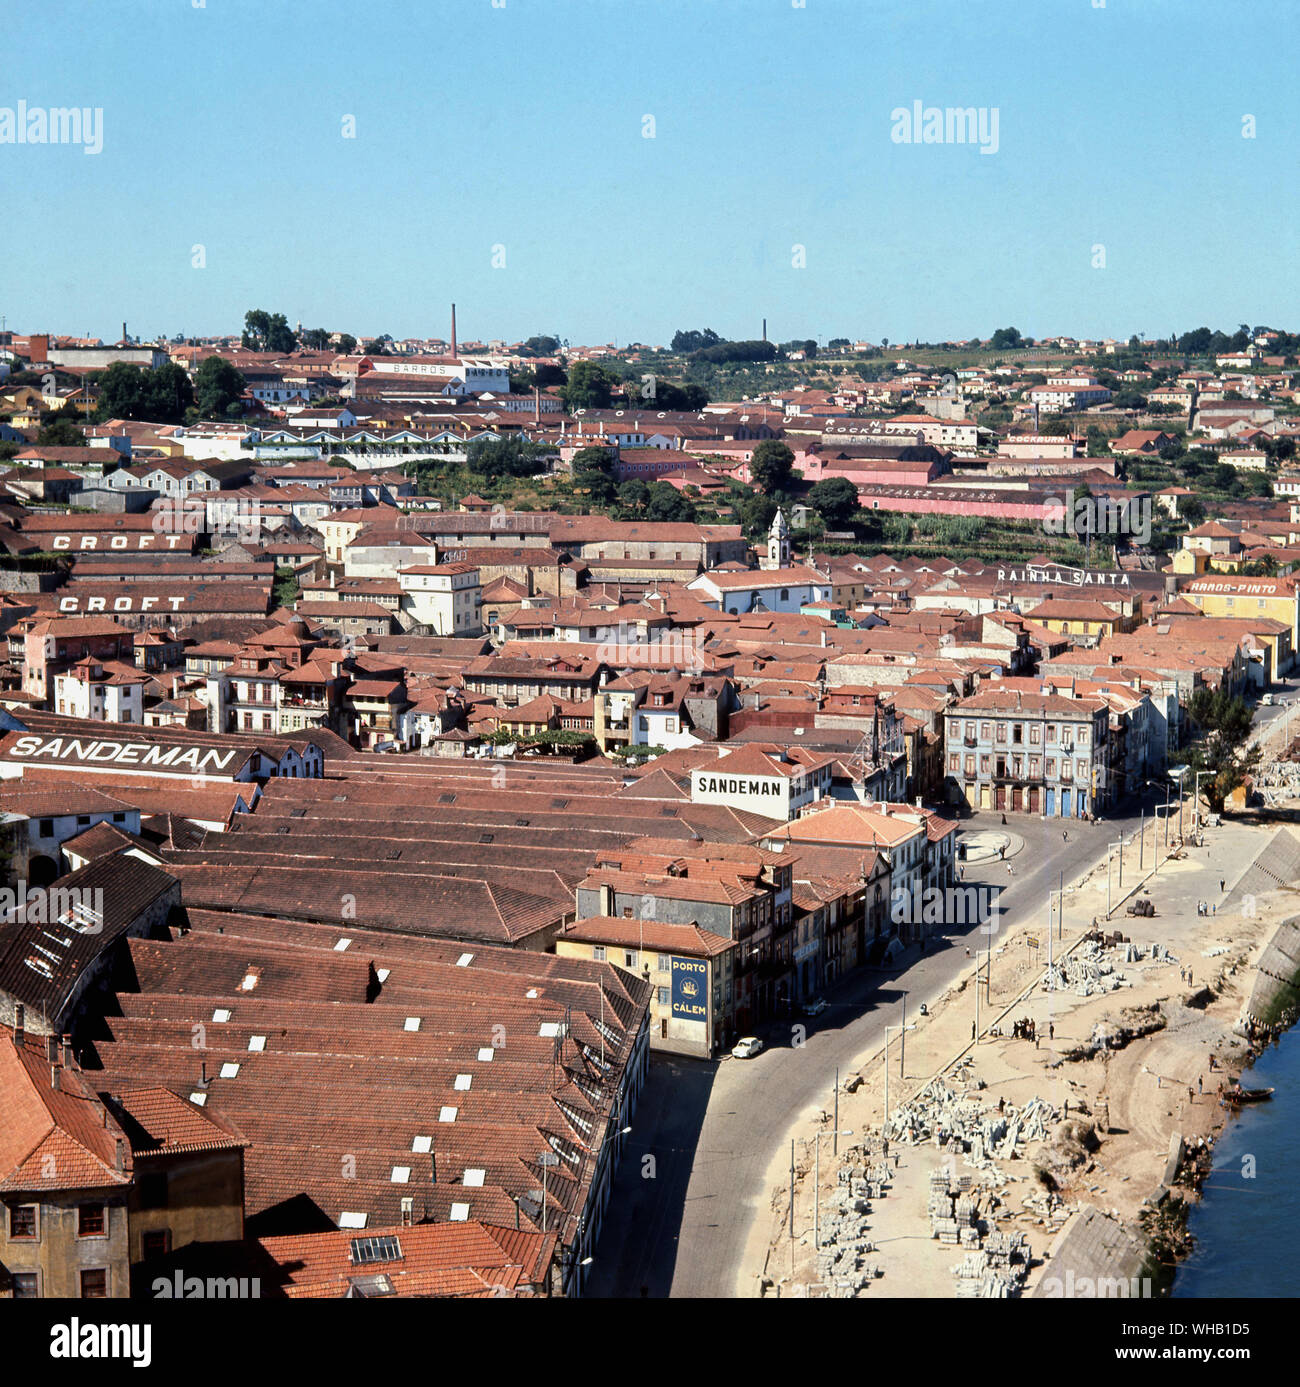 View of the port lodges from the high river bridge at Vila Nova de Gaia, Oporto - Stock Photo